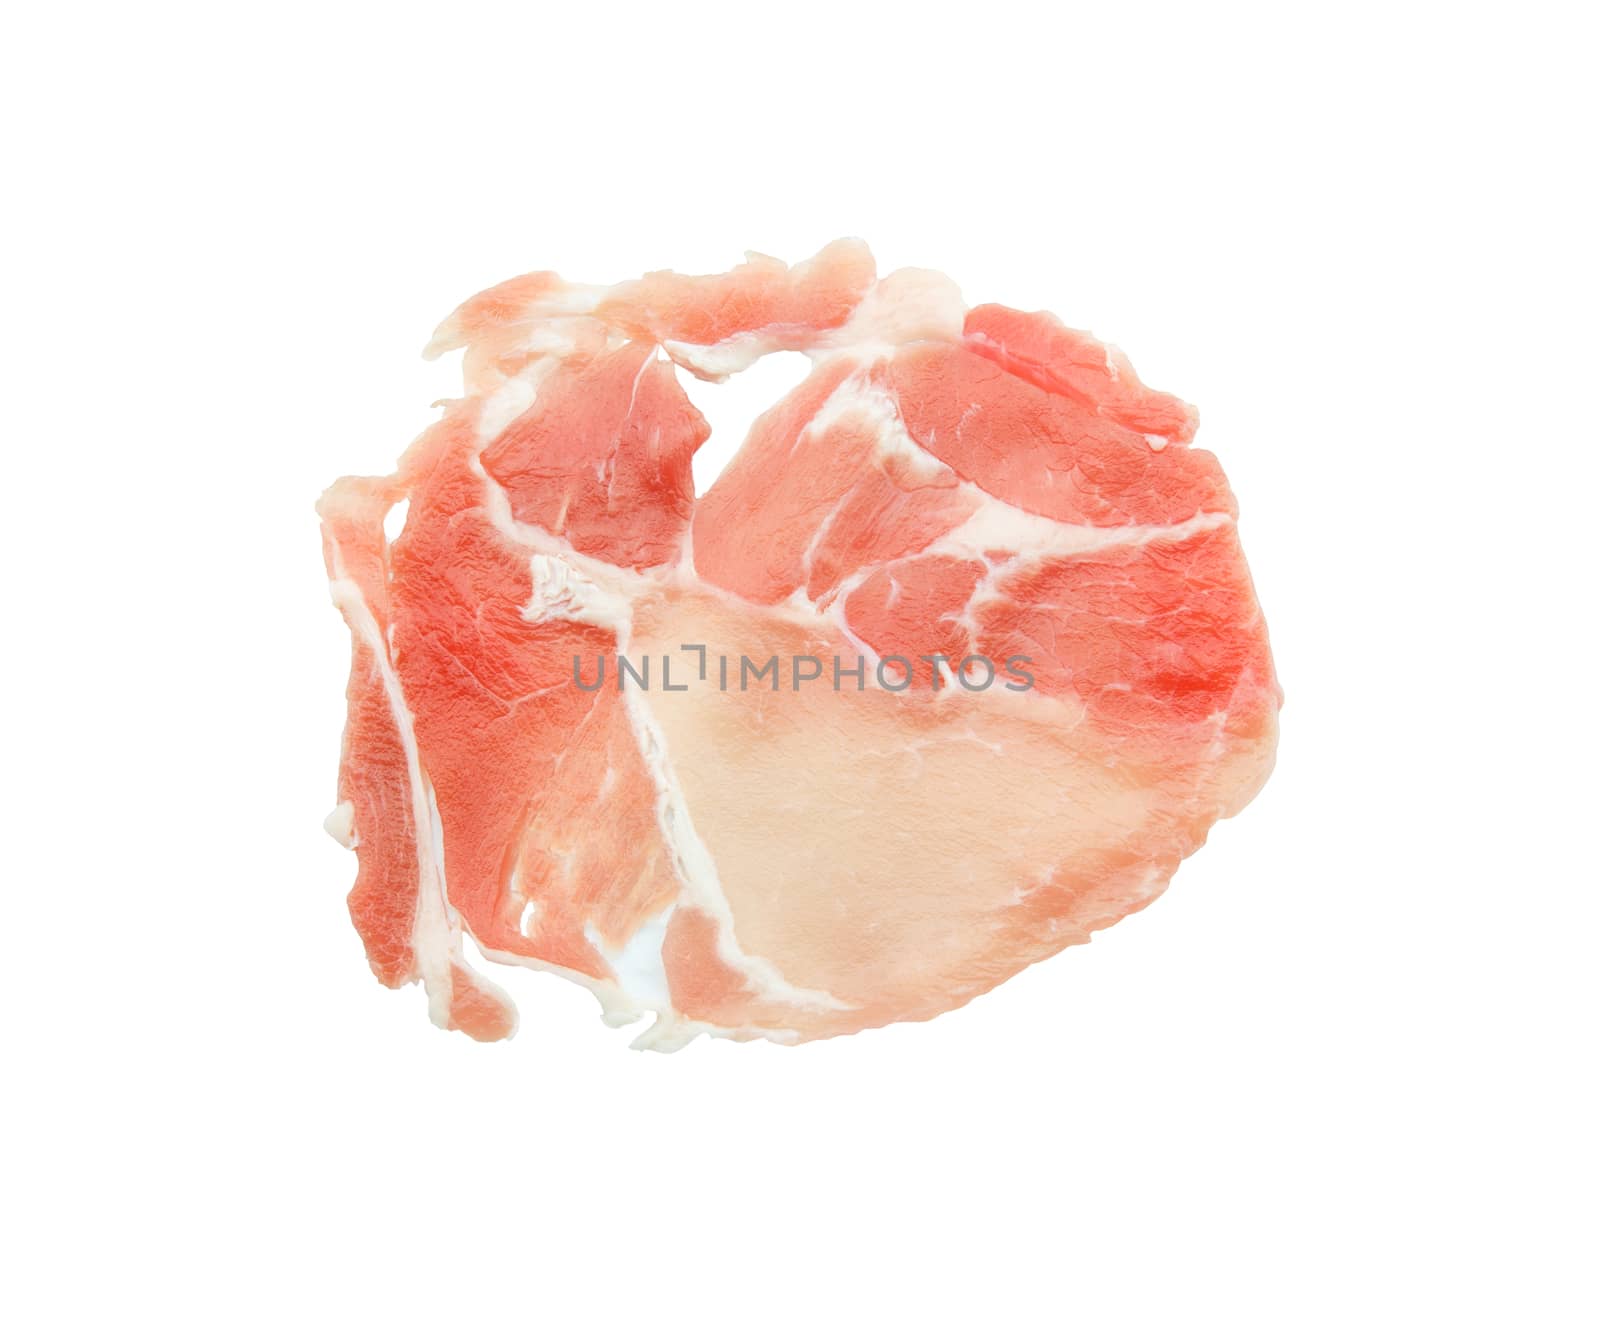 Sliced raw pork  isolated on white background